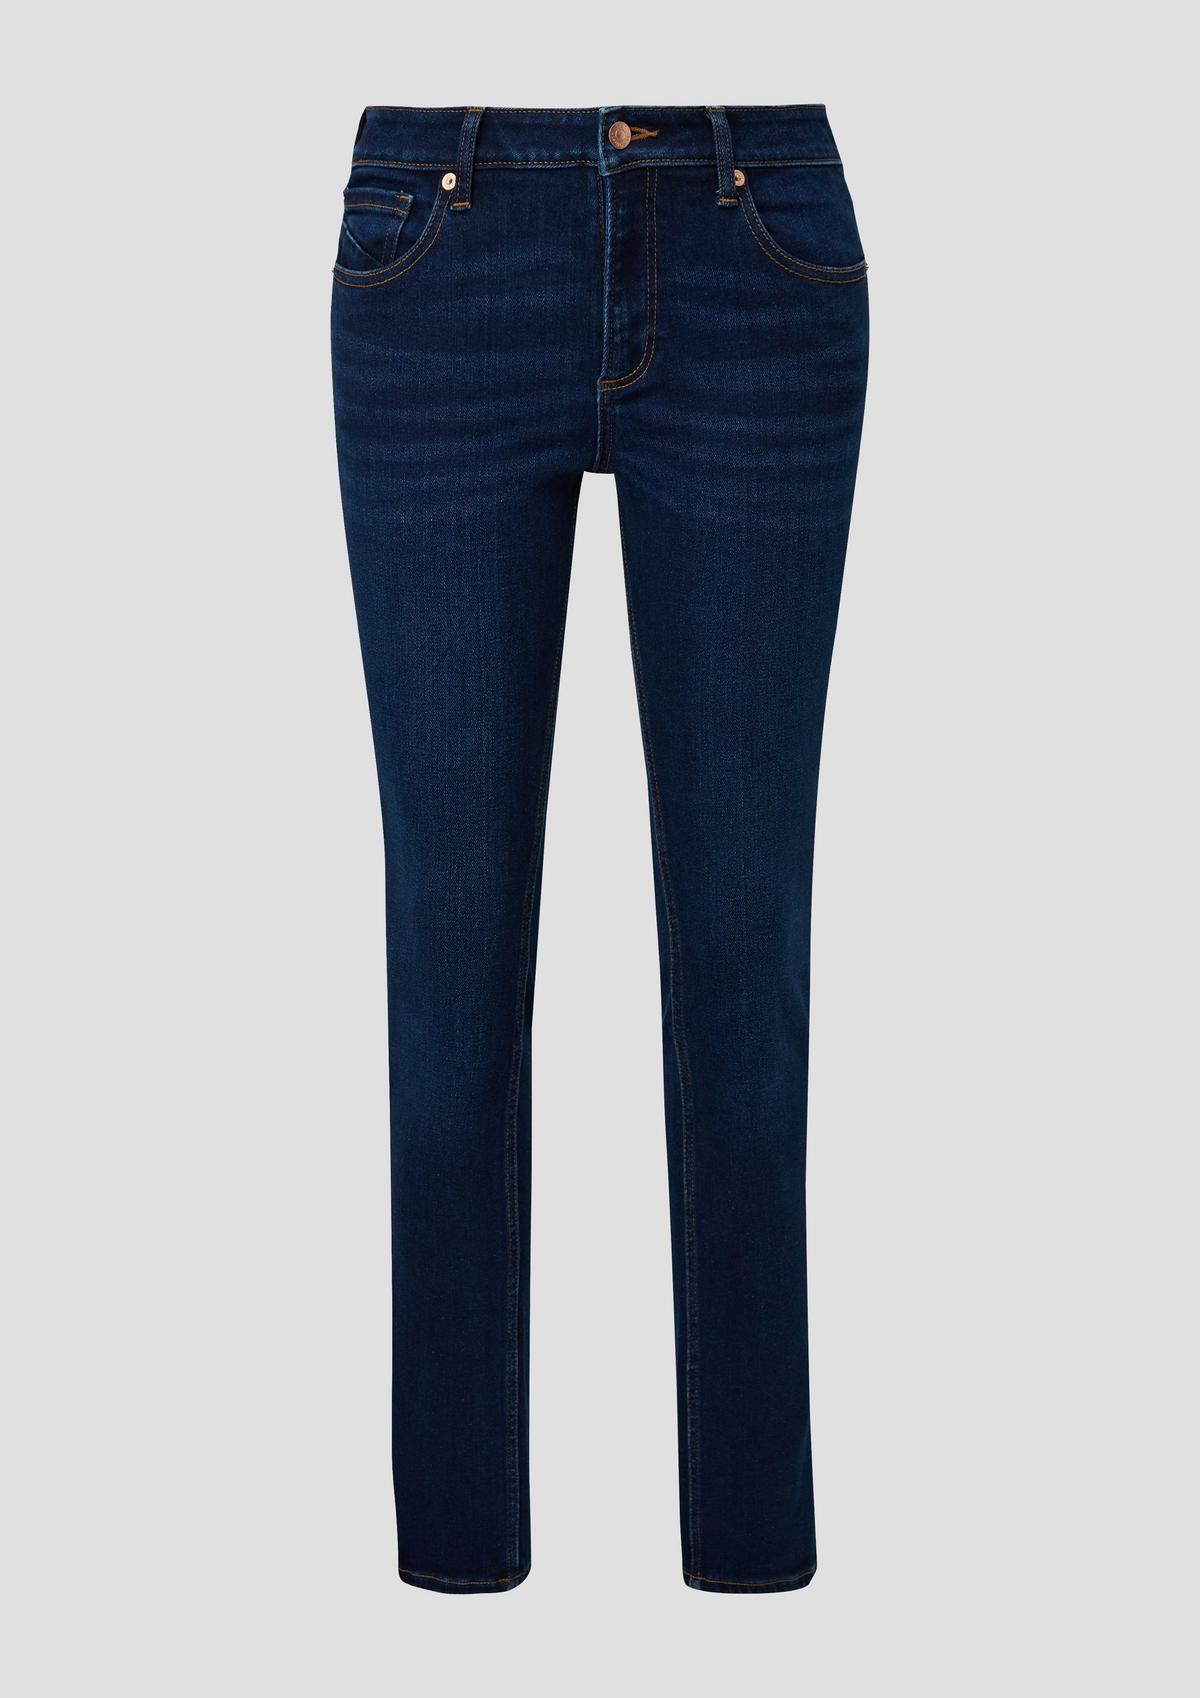 s.Oliver Catie jeans / slim fit / mid rise / slim leg / super stretch